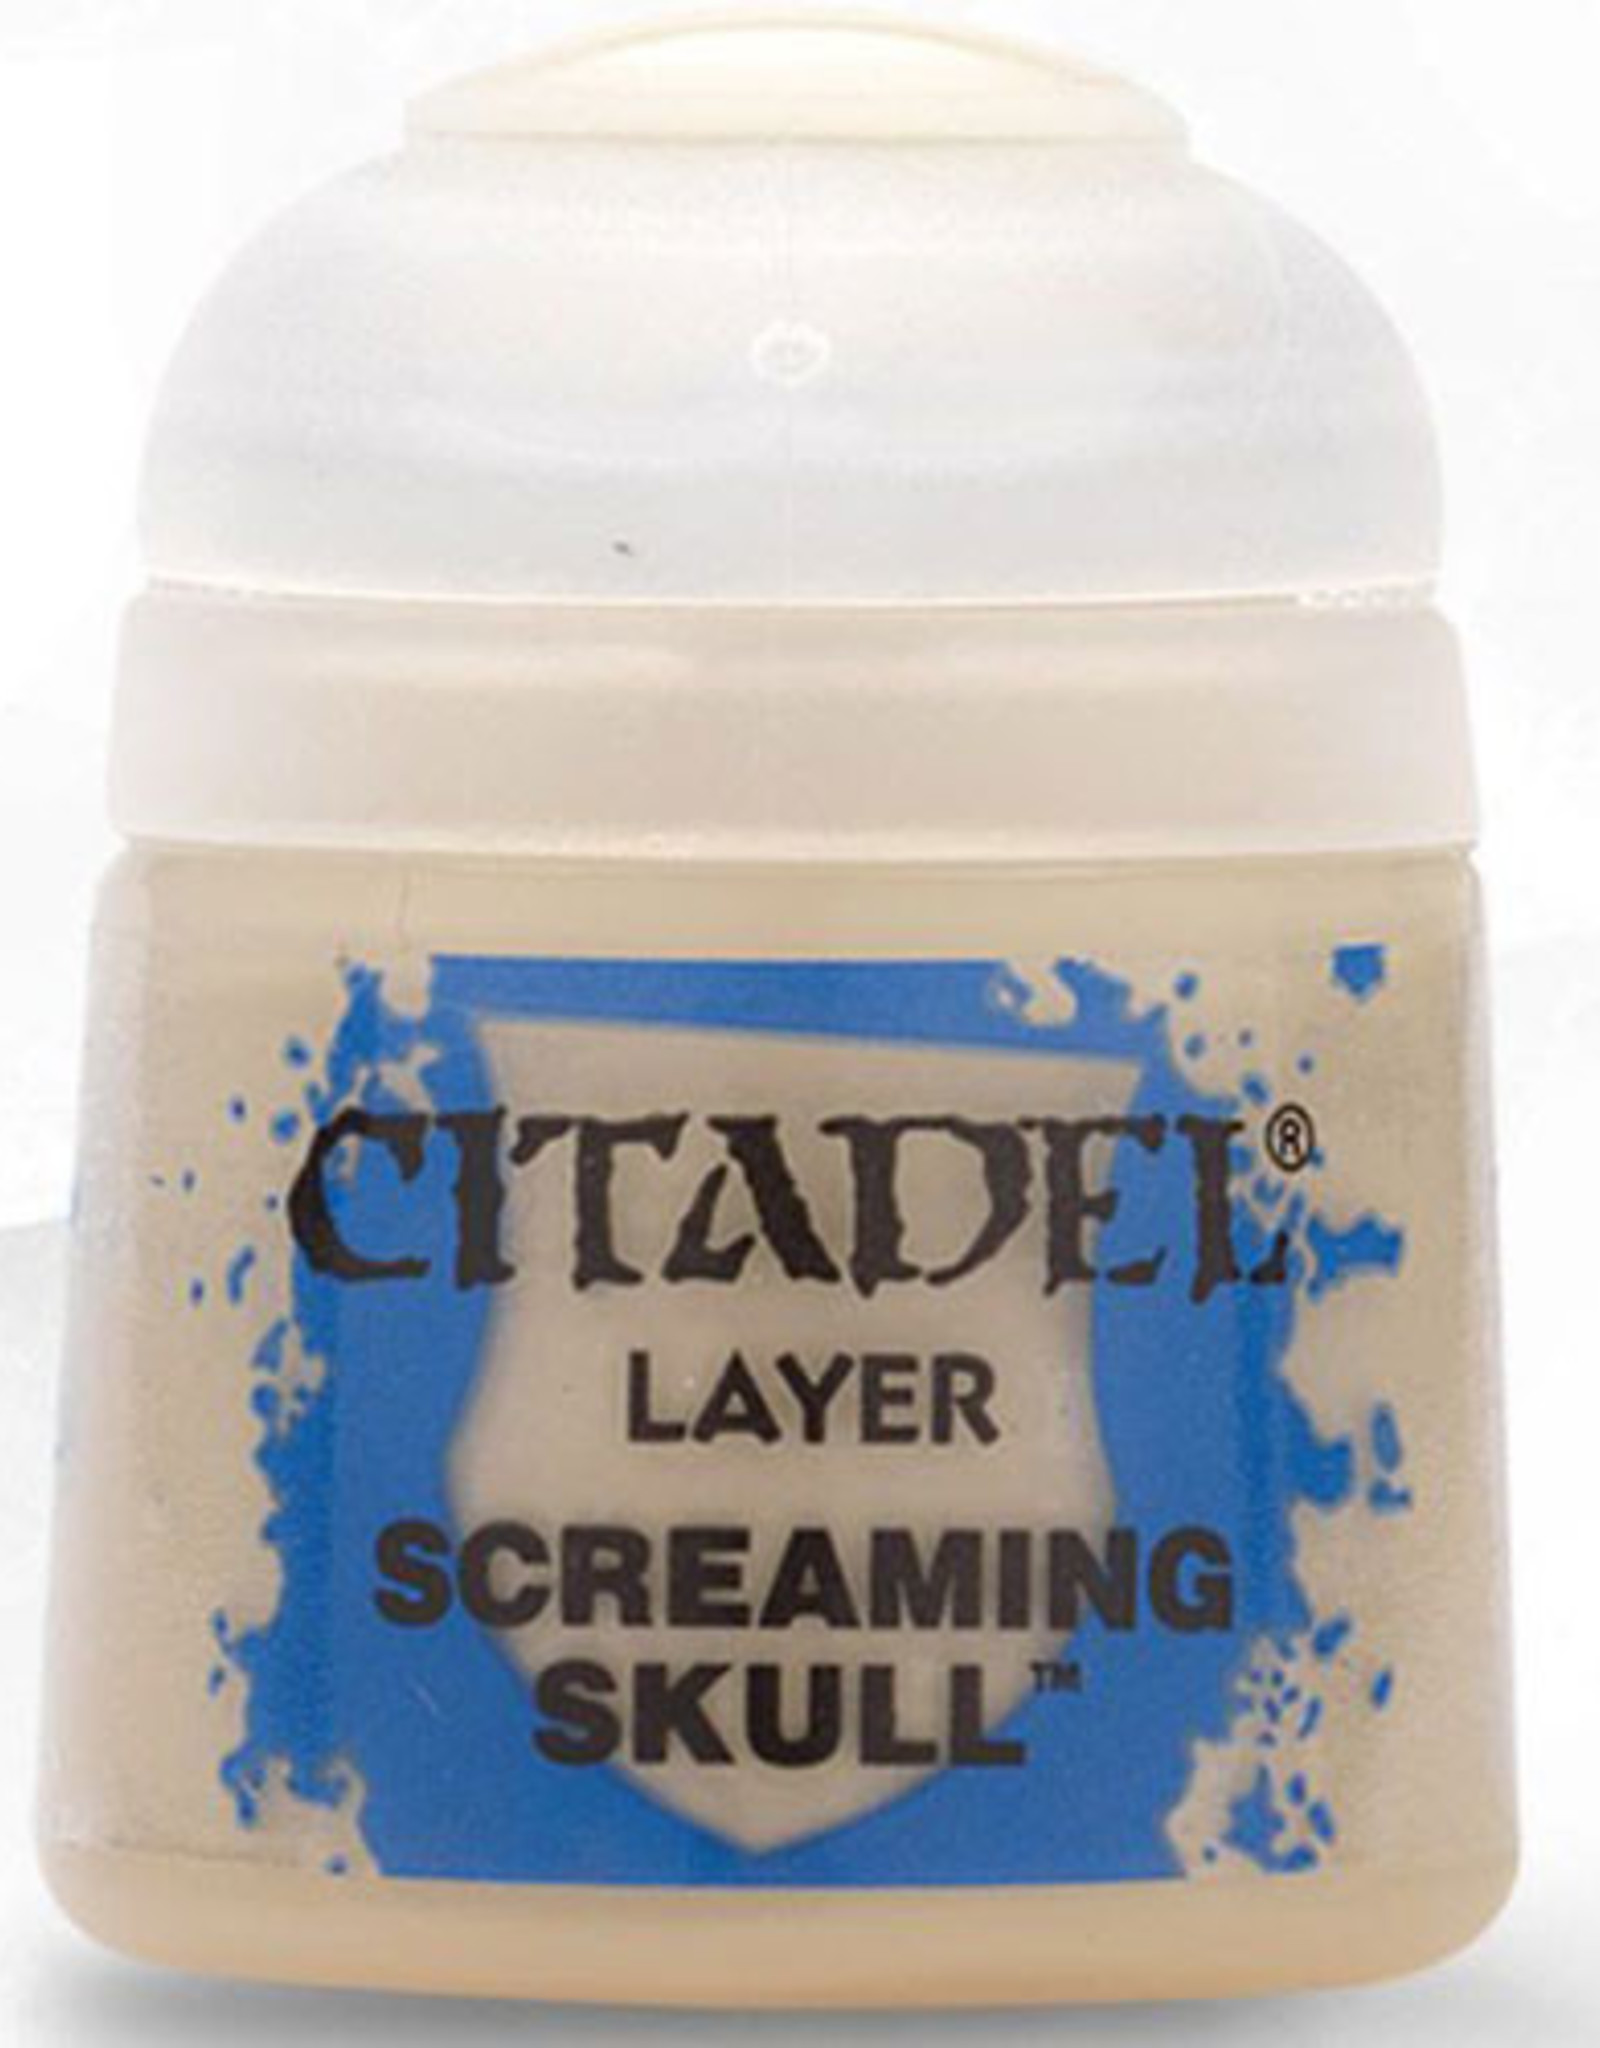 Games Workshop Citadel Layer: Screaming Skull